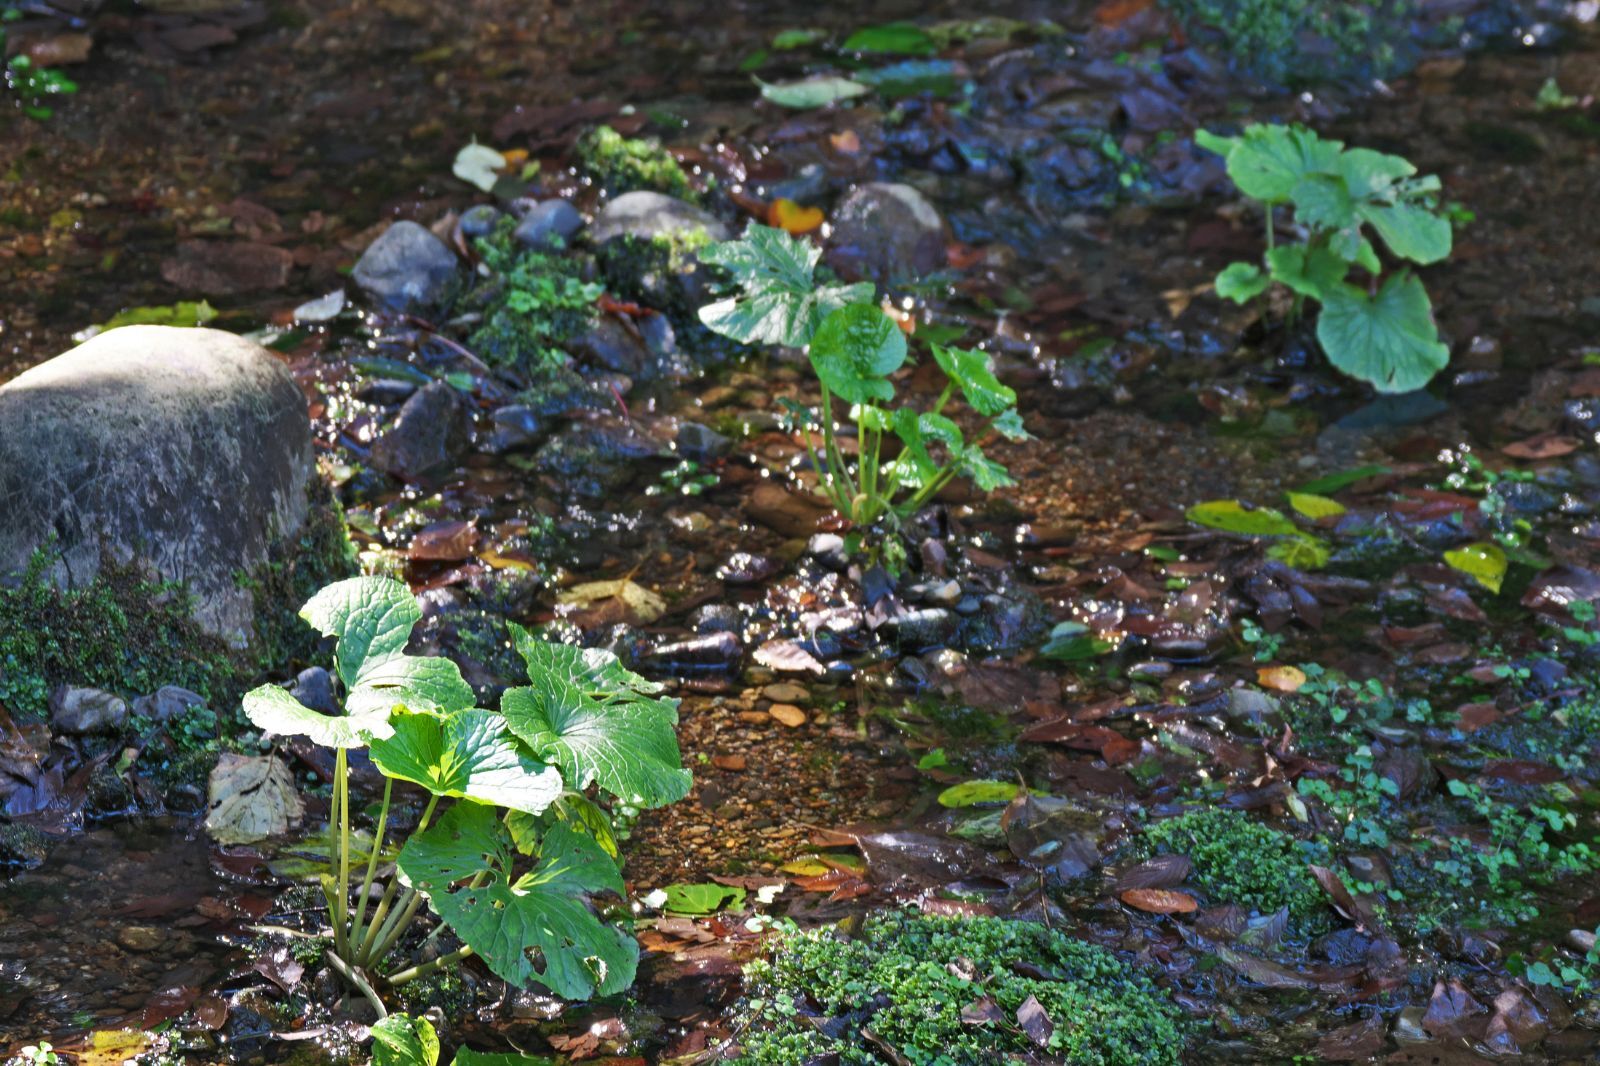 wasabi growing near rocks